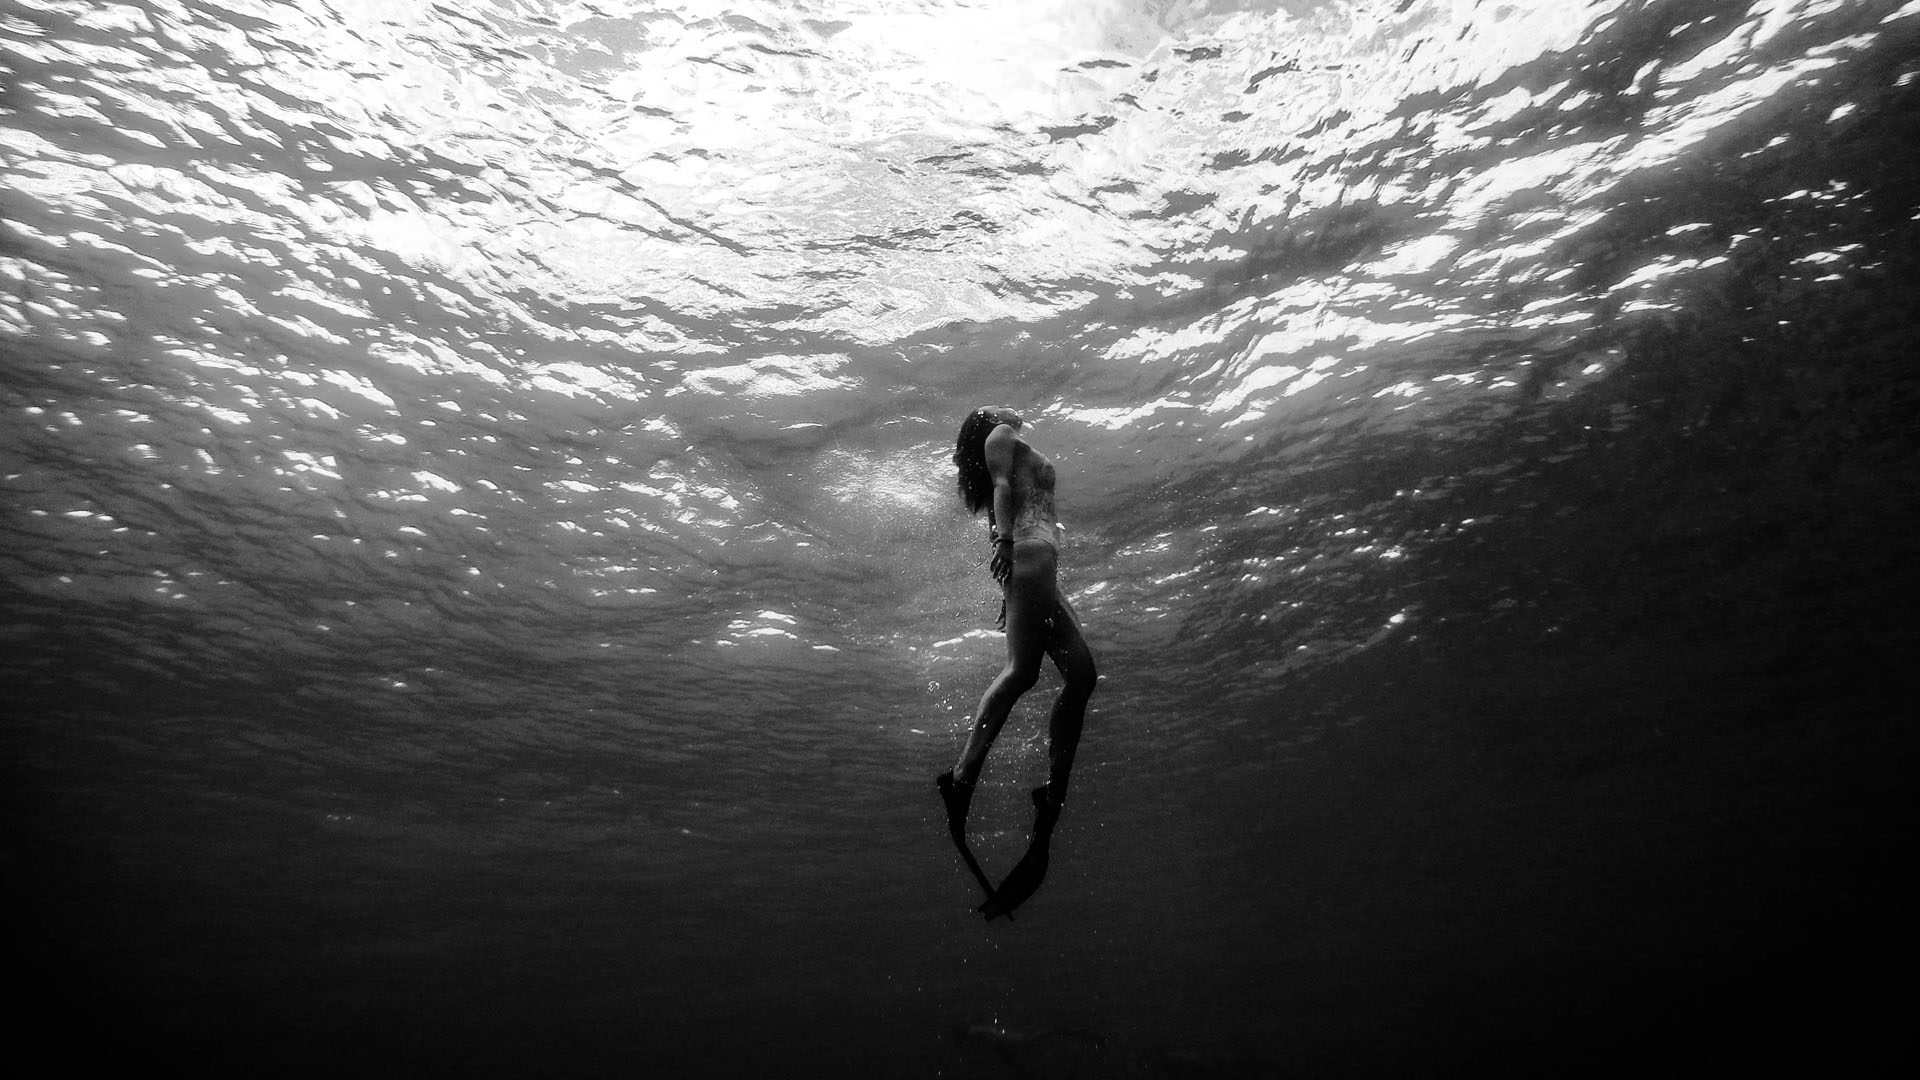 free diving in the ocean